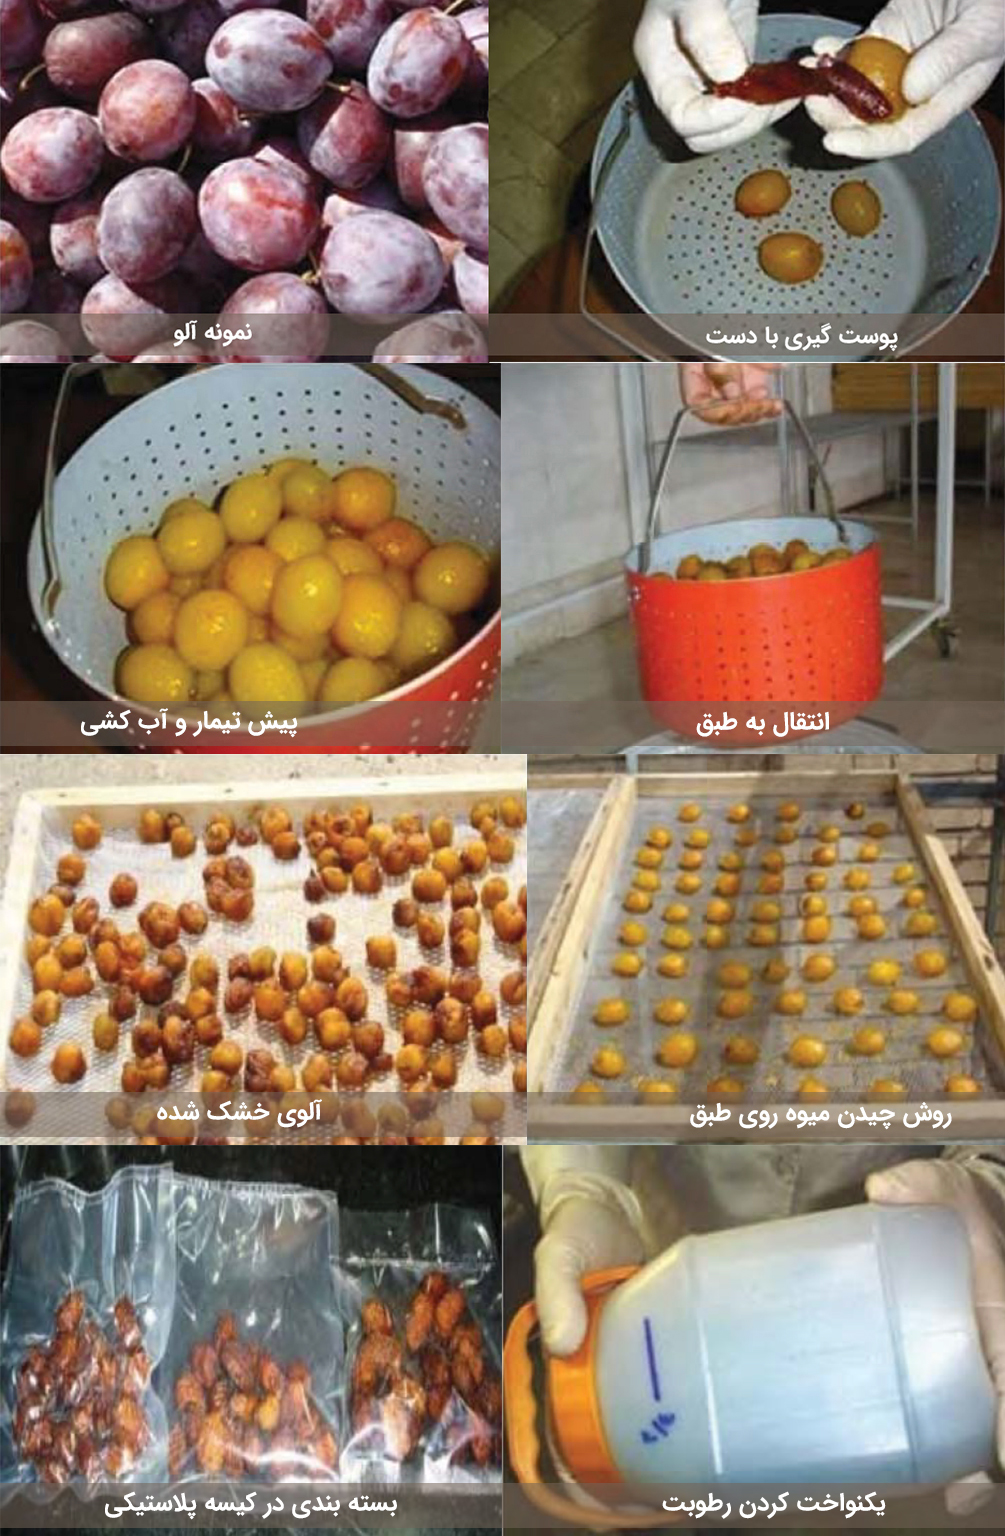 marahele khoshk kardan aloo - آموزش صفر تا صد خشک کردن میوه و سبزیجات